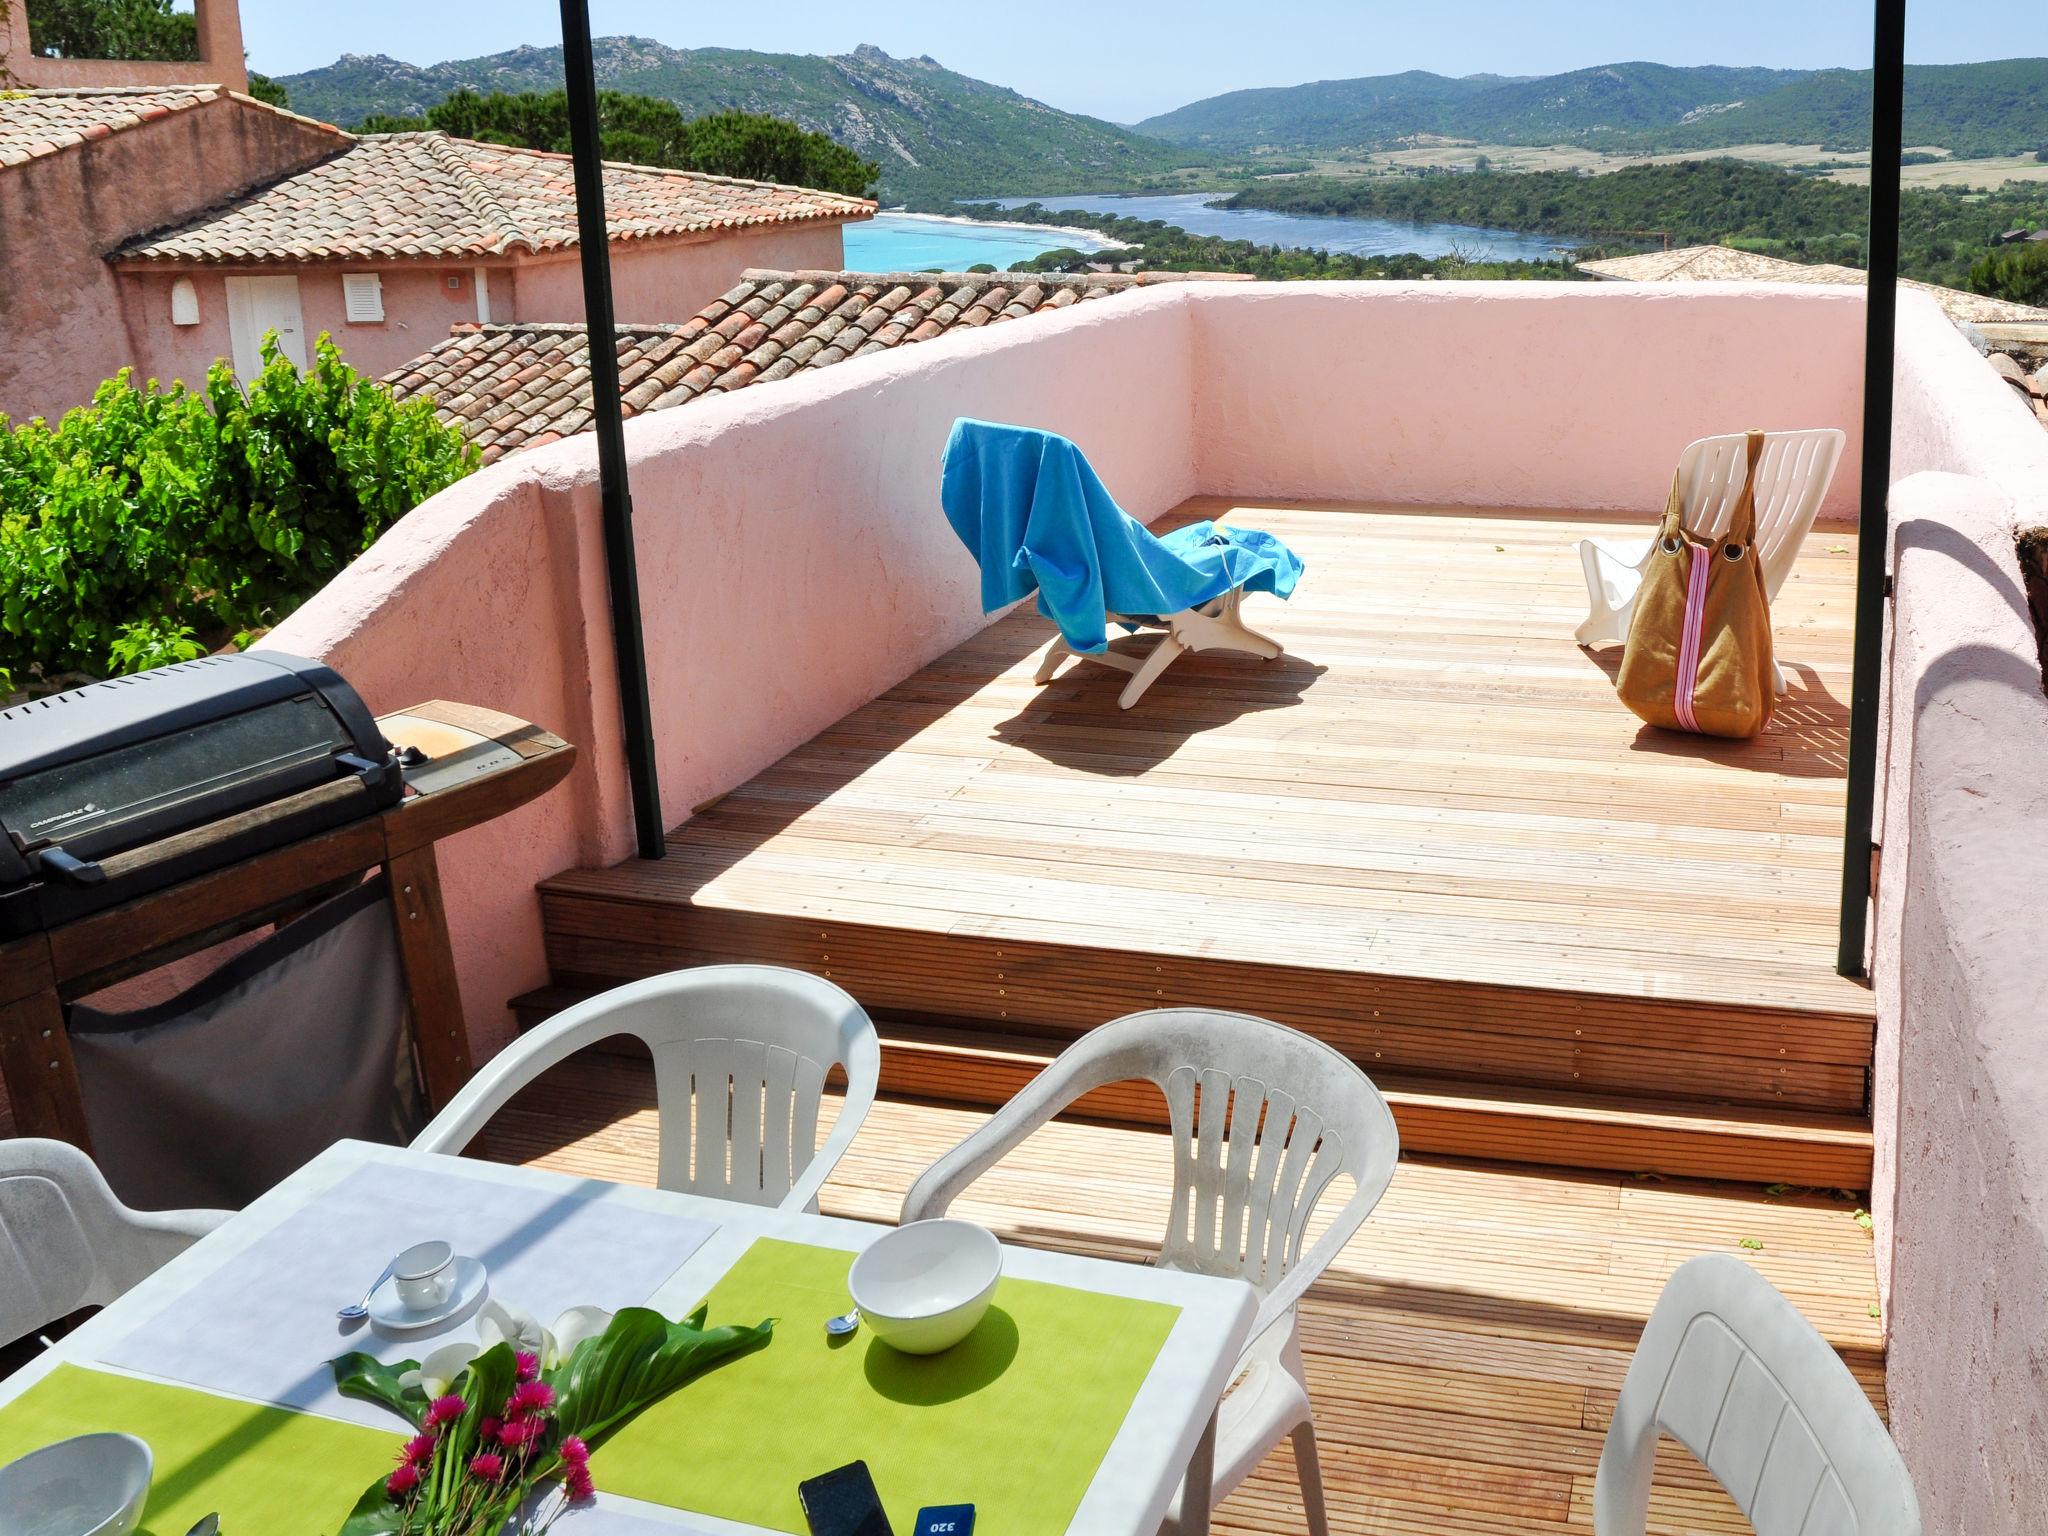 Photo 1 - 2 bedroom Apartment in Porto-Vecchio with swimming pool and sea view